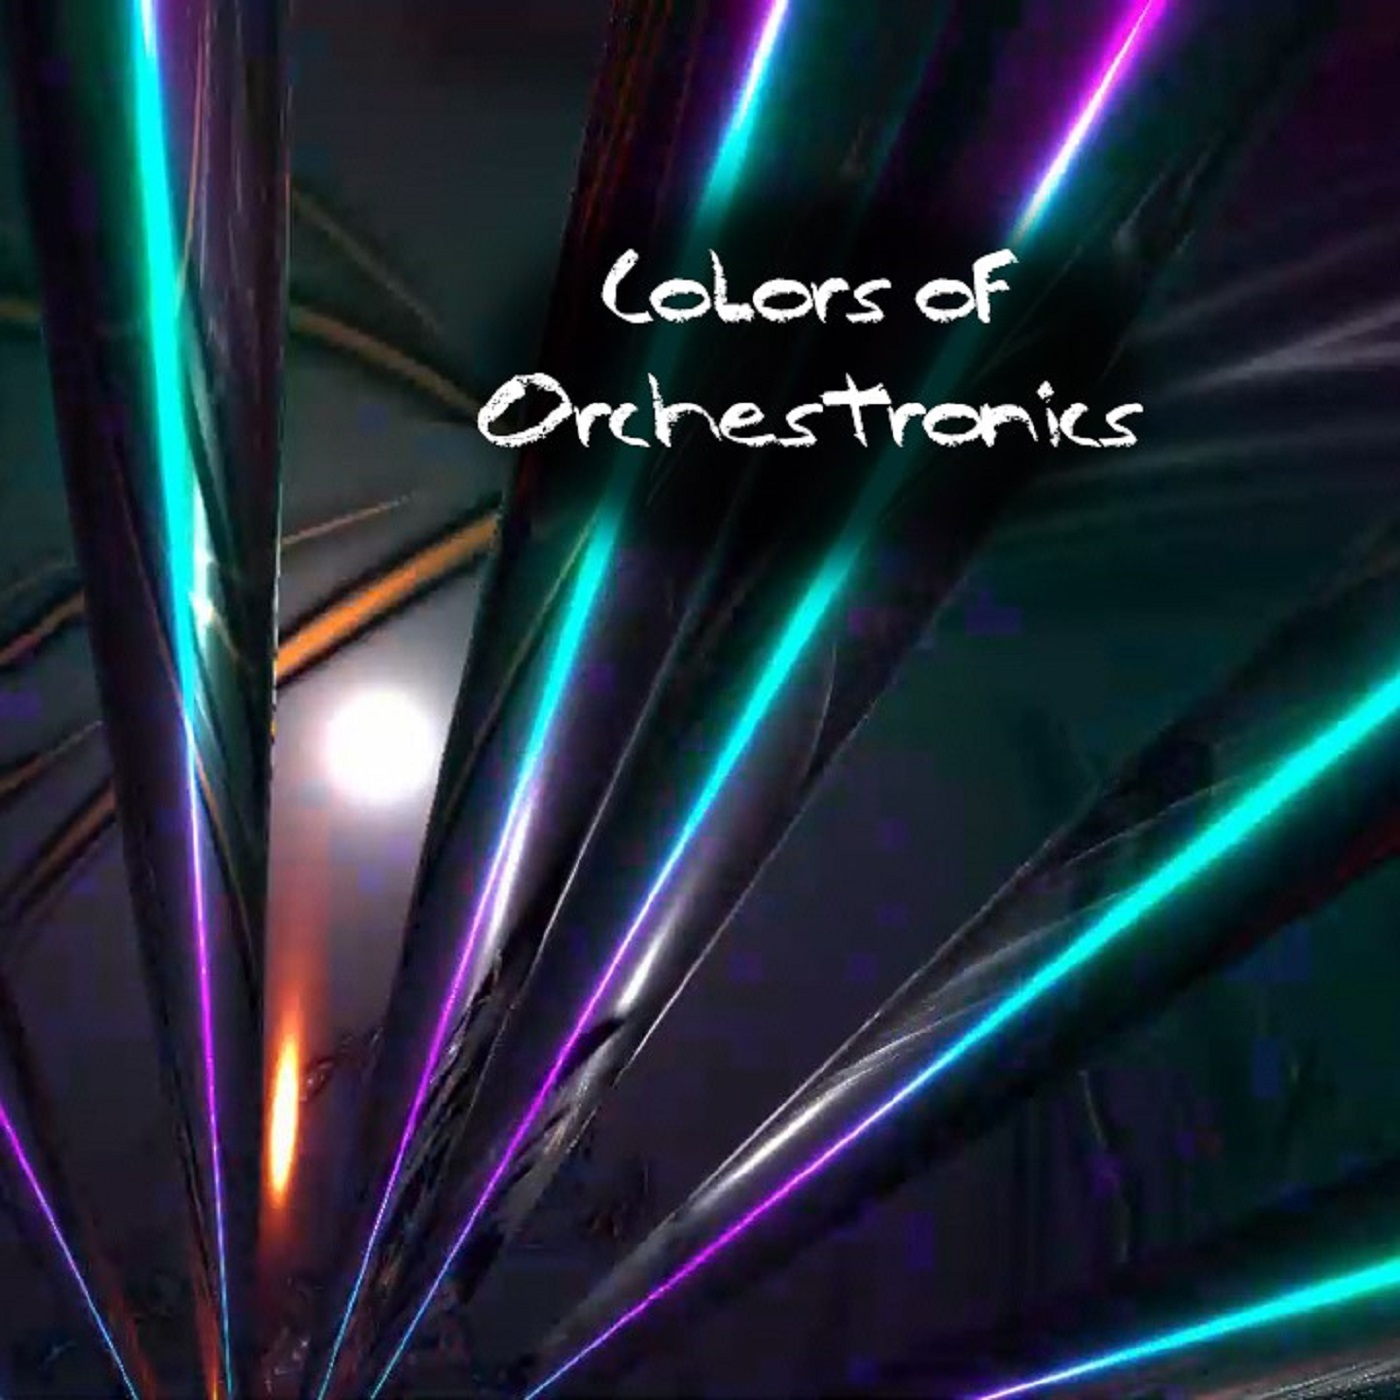 Album: Colors of Orchestronics